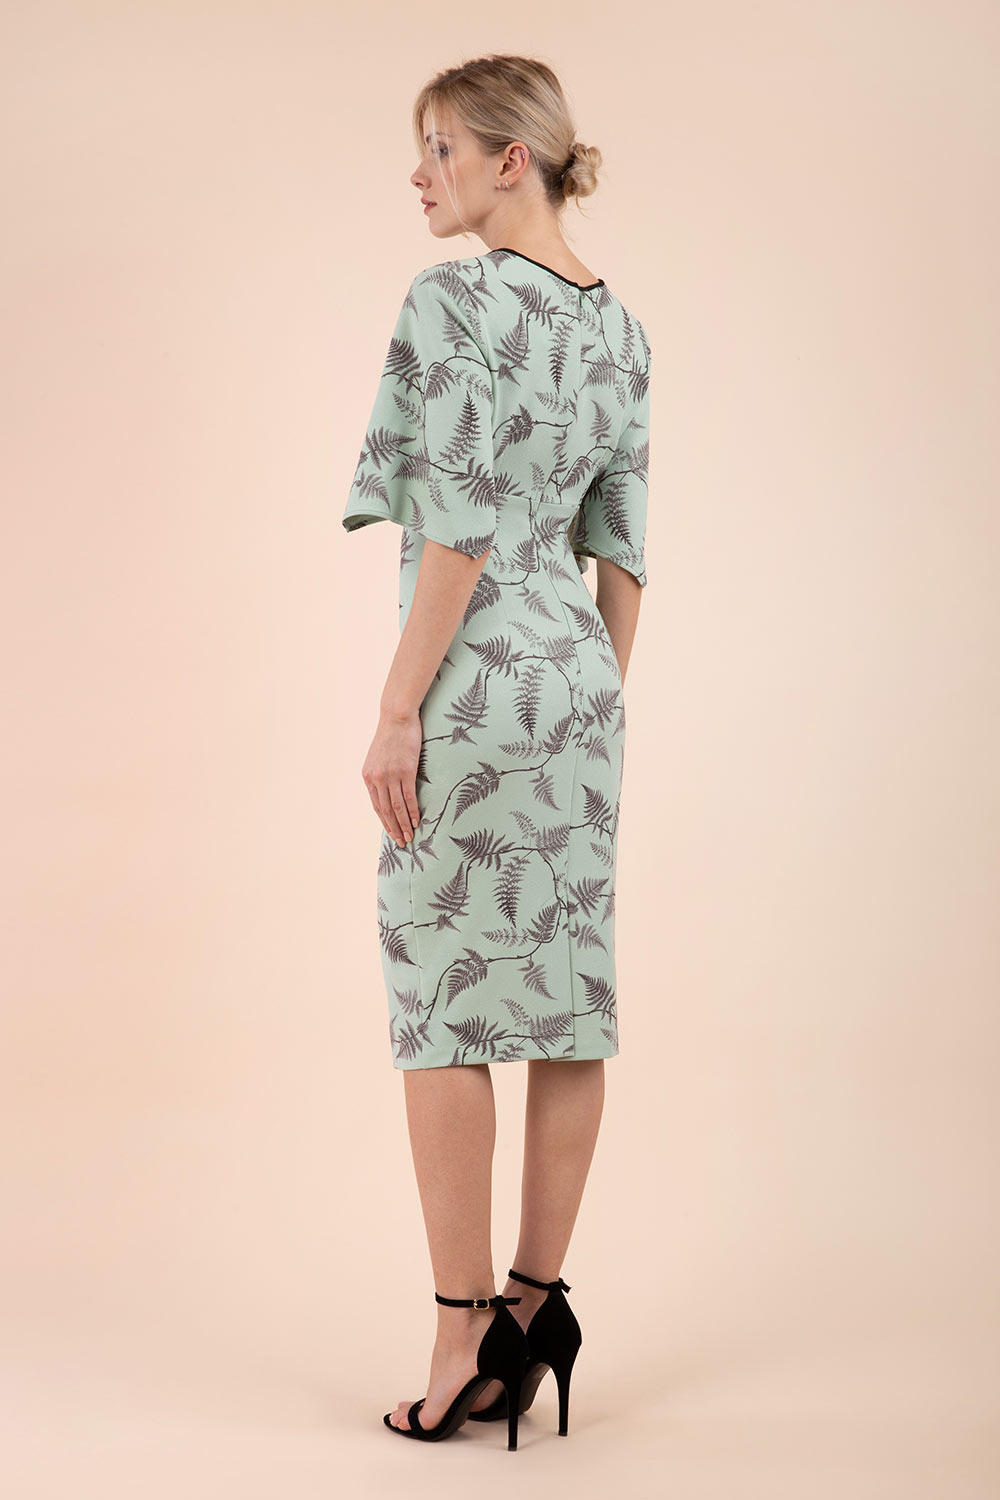 Model wearing the Diva Memphis Print dress dress in pencil dress design in deco green fern print front image